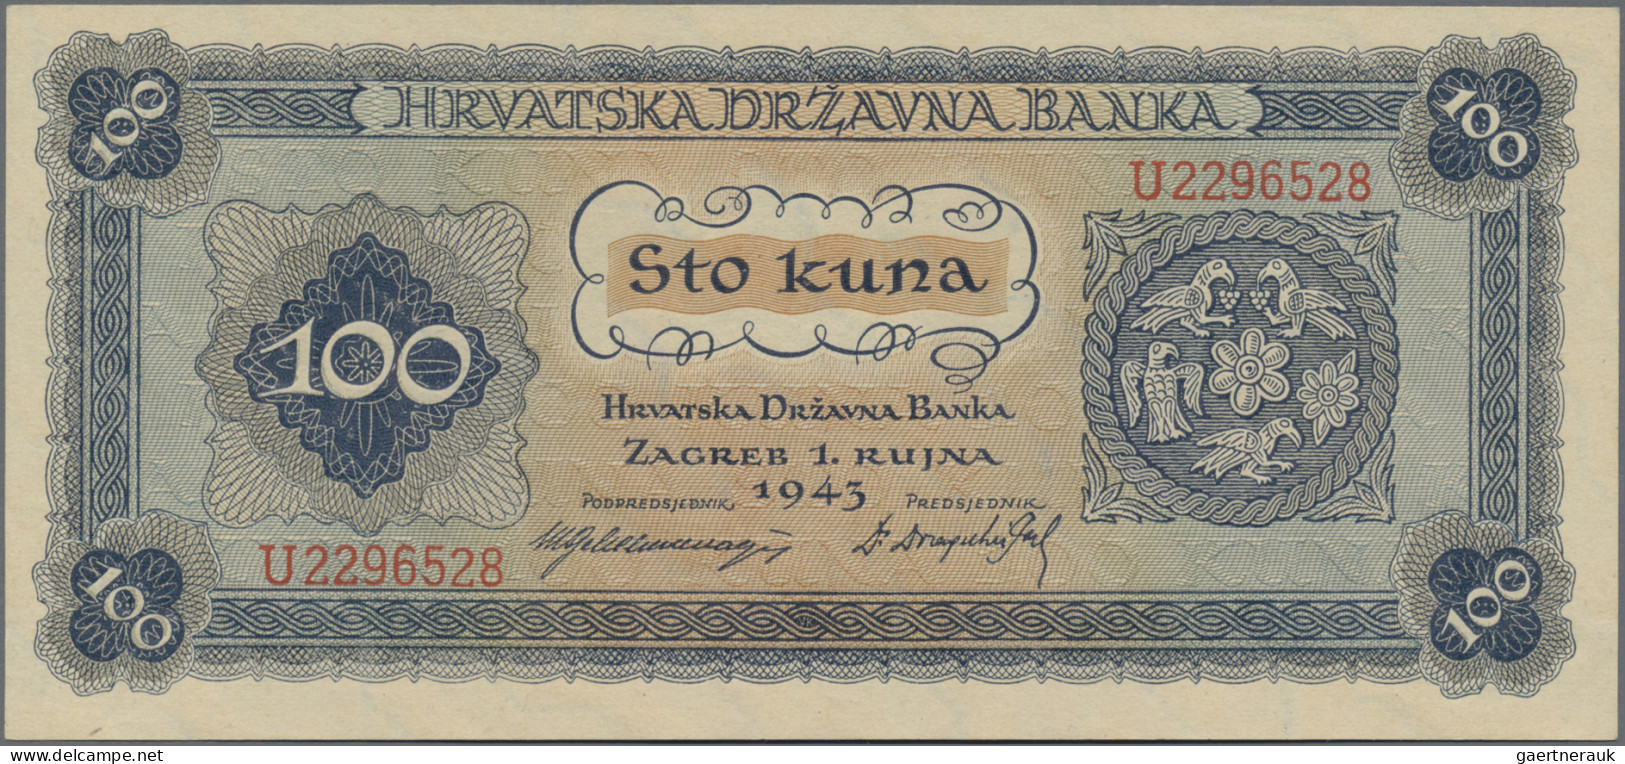 Croatia: 20 Kuna 1944 (P.9b In UNC) And 100 Kuna 1943 (P.11, UNC). (2 Pcs.) - Kroatien